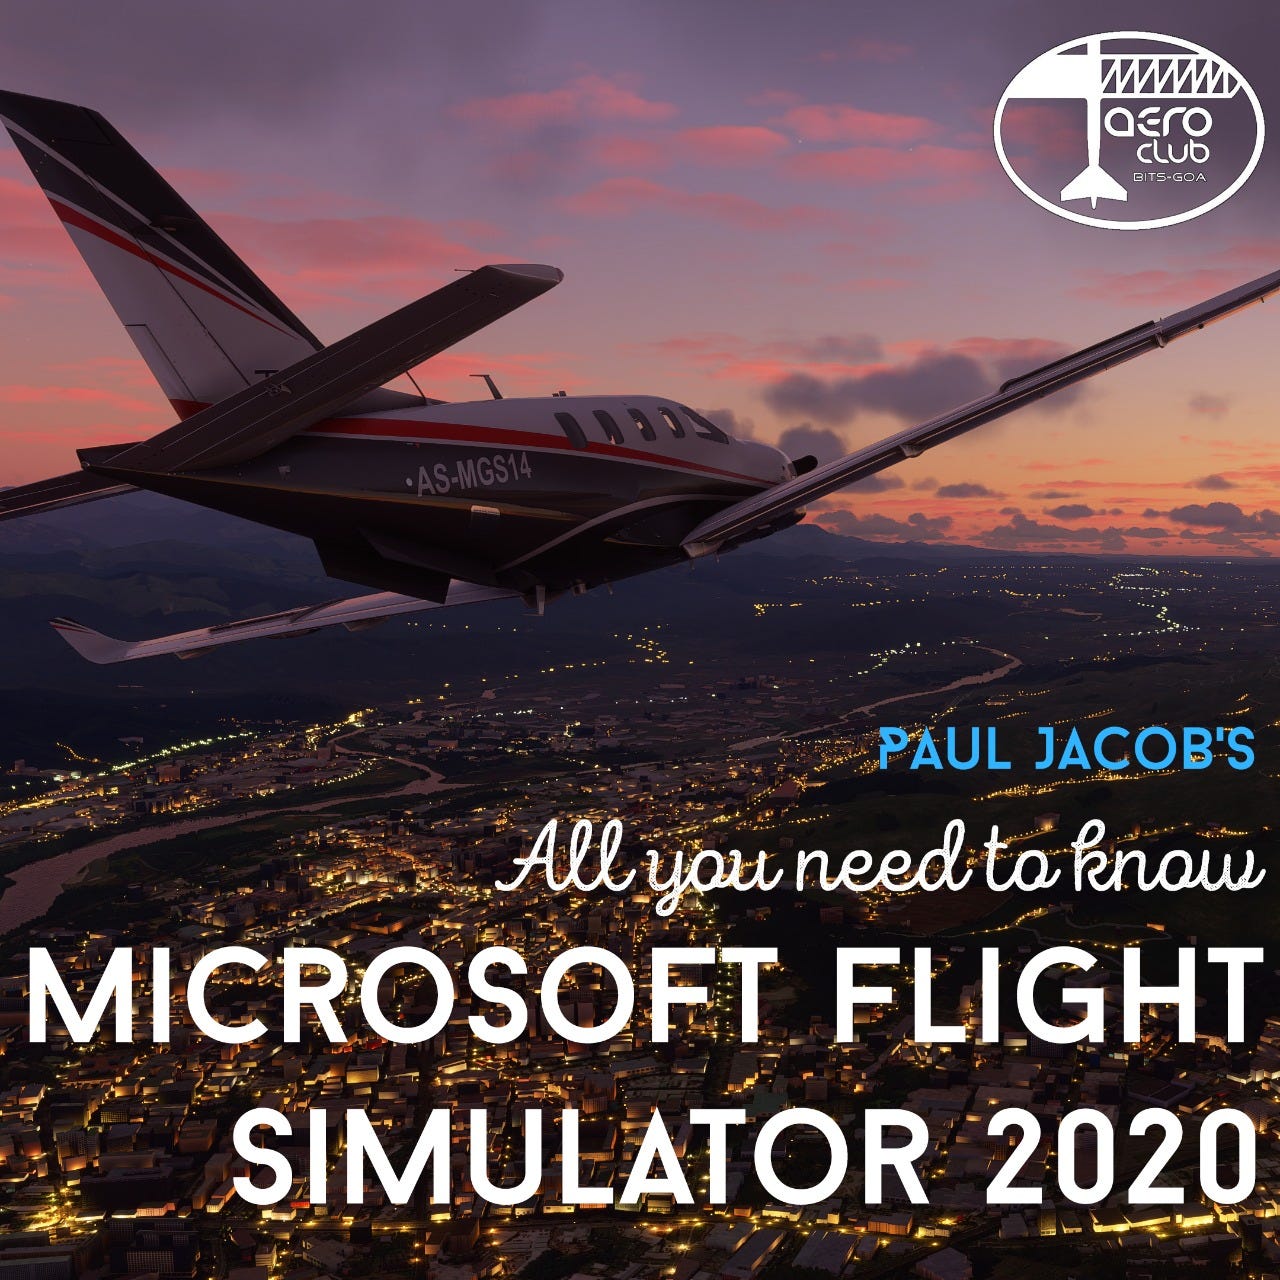 Ahead Of Its Xbox Release, Microsoft Flight Simulator Has